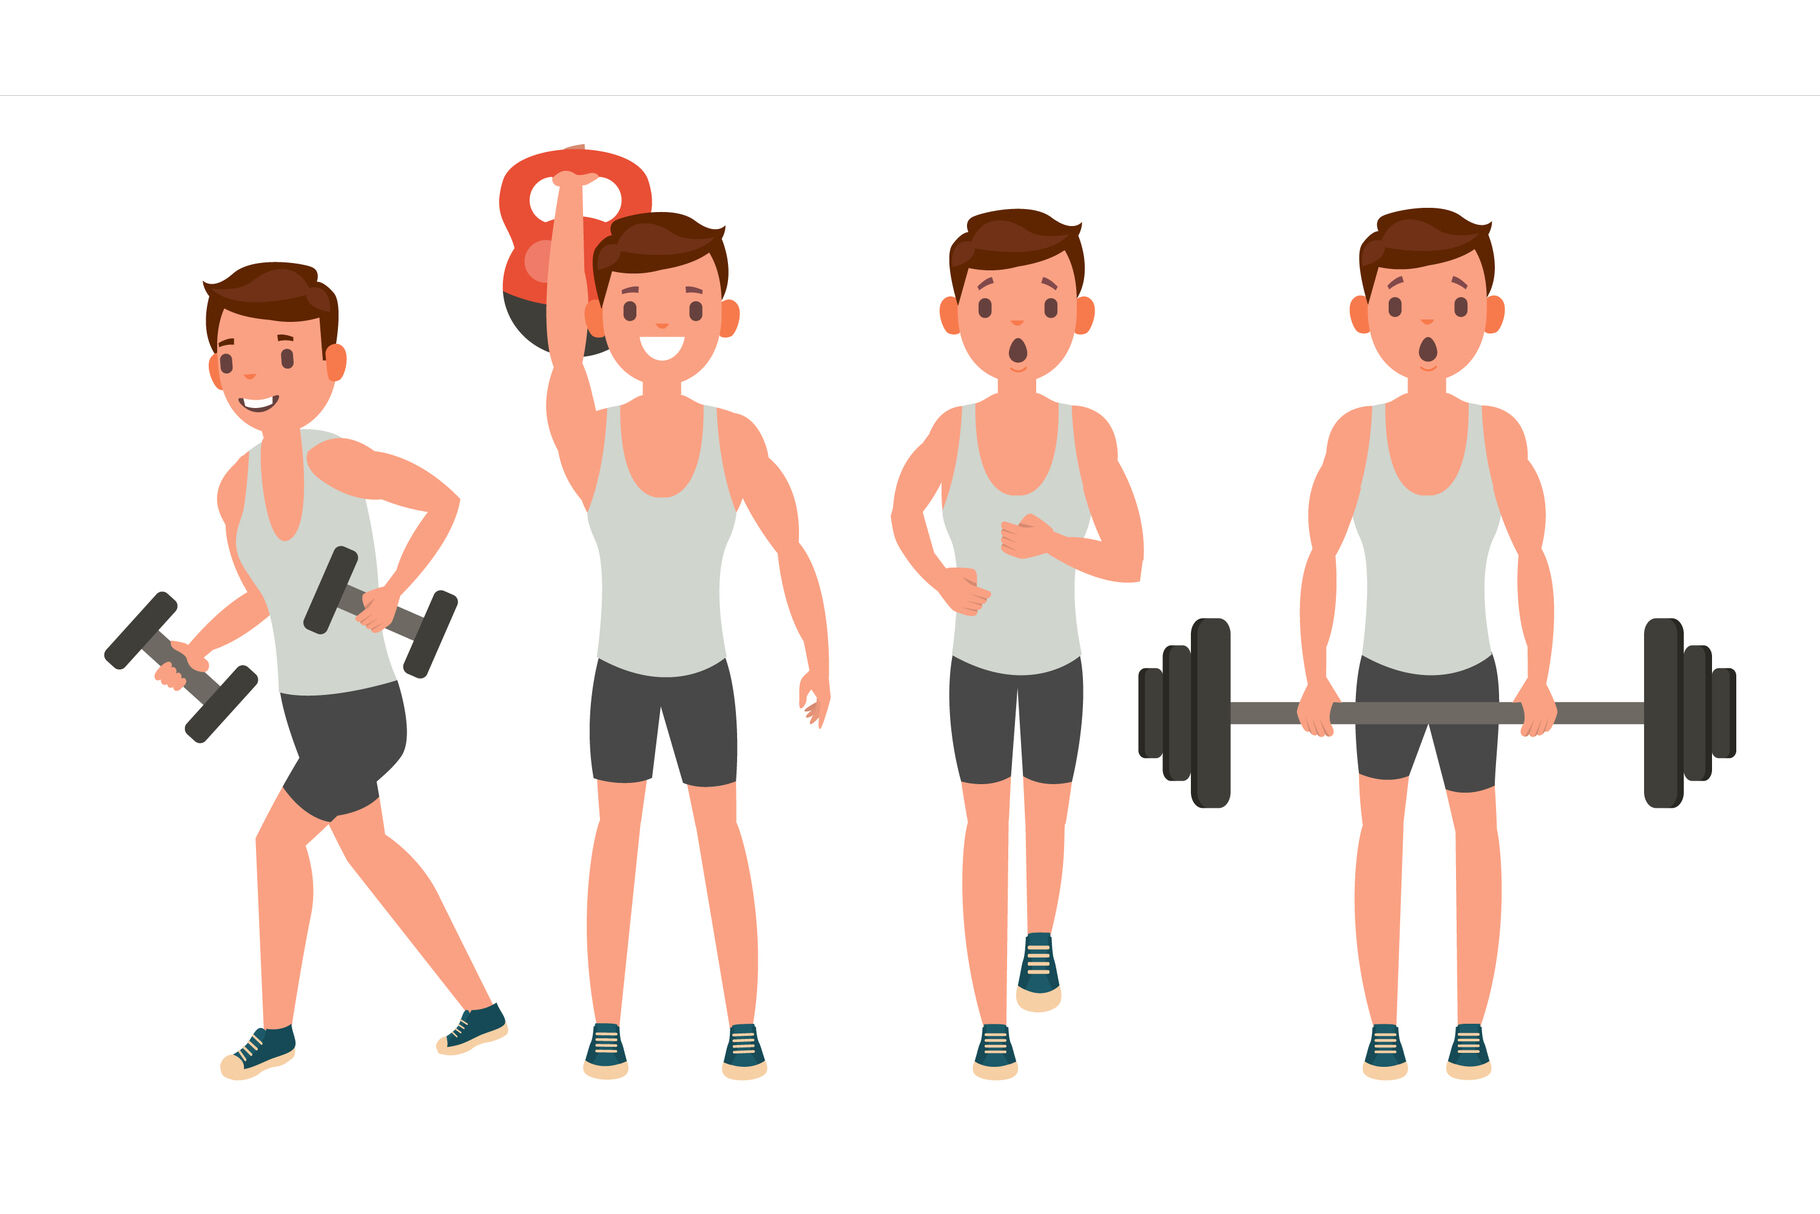 https://media1.thehungryjpeg.com/thumbs2/ori_3750170_9mdd9am83agmygpo4e0kbtdnwrae5c8b90n6uv4t_fitness-man-vector-different-poses-work-out-active-fitness-flat-cartoon-illustration.jpg